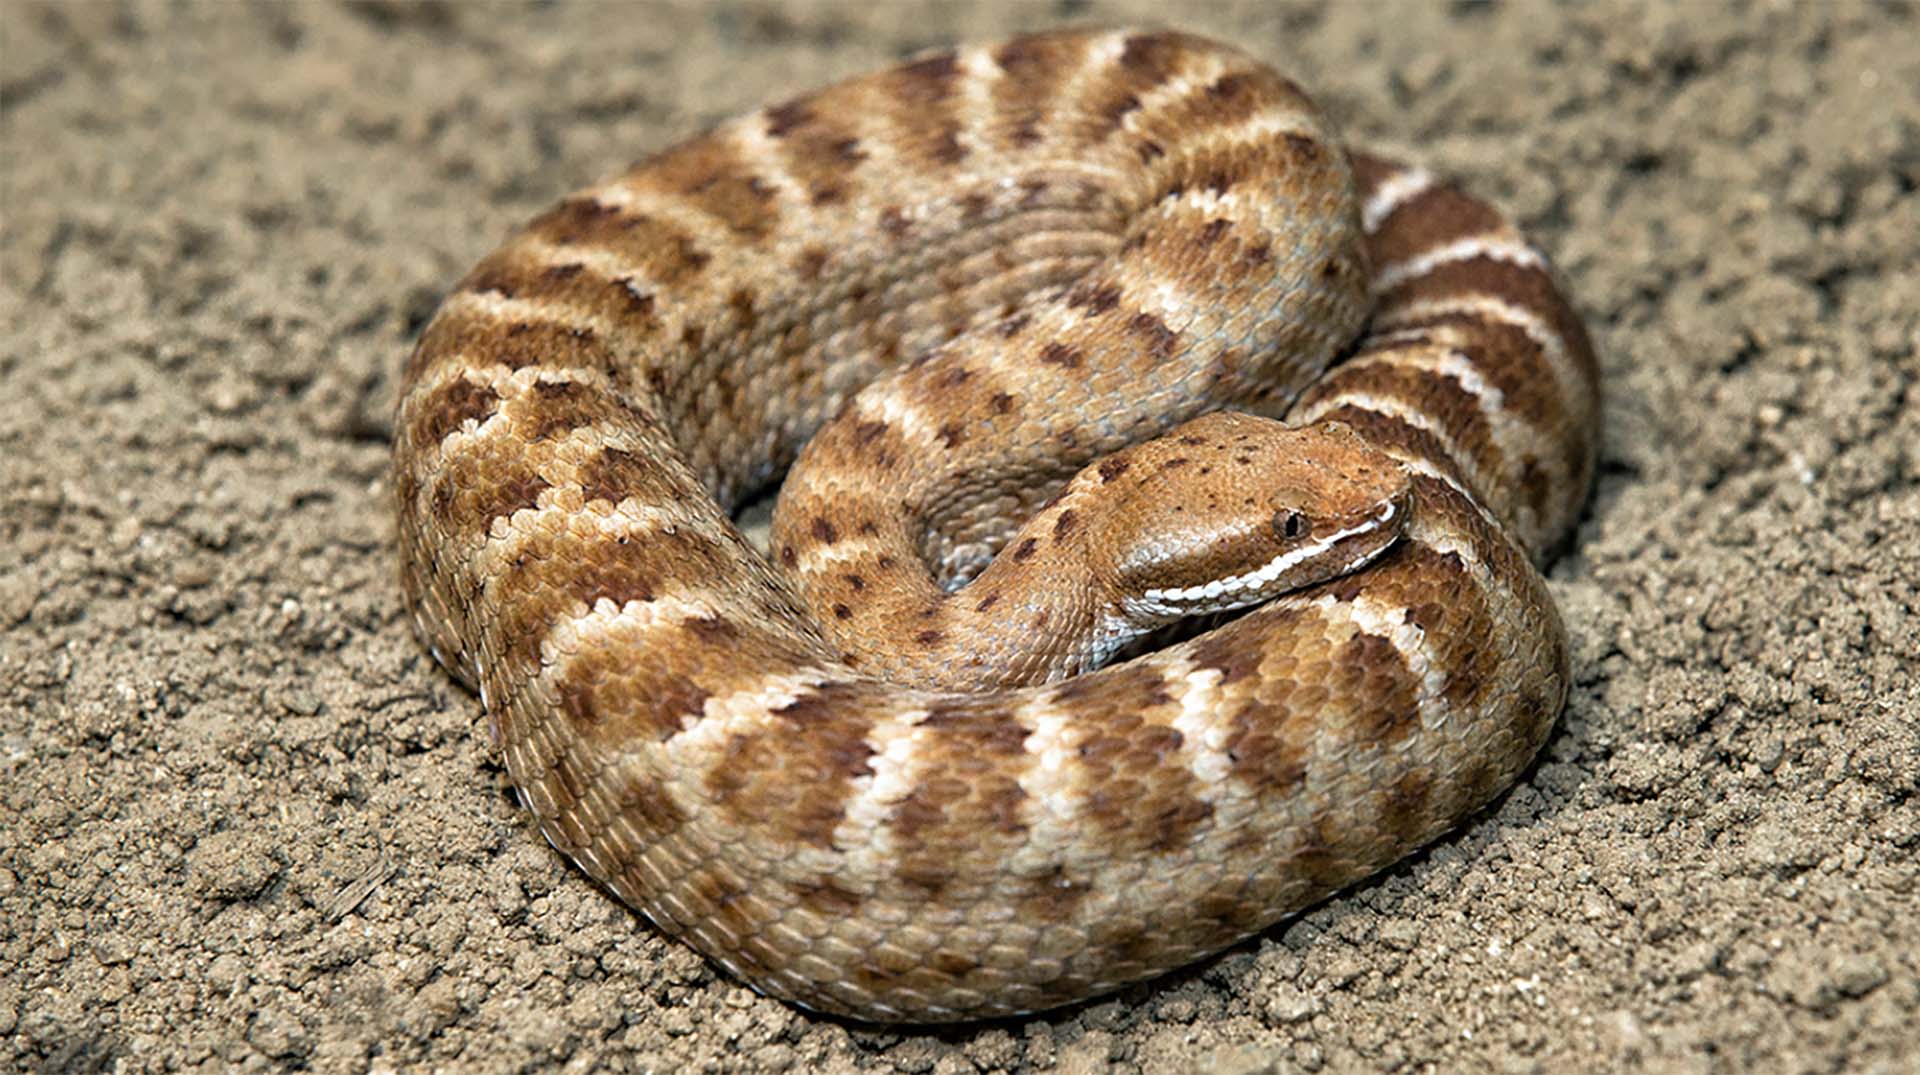 Rattlesnake | San Diego Zoo Animals & Plants